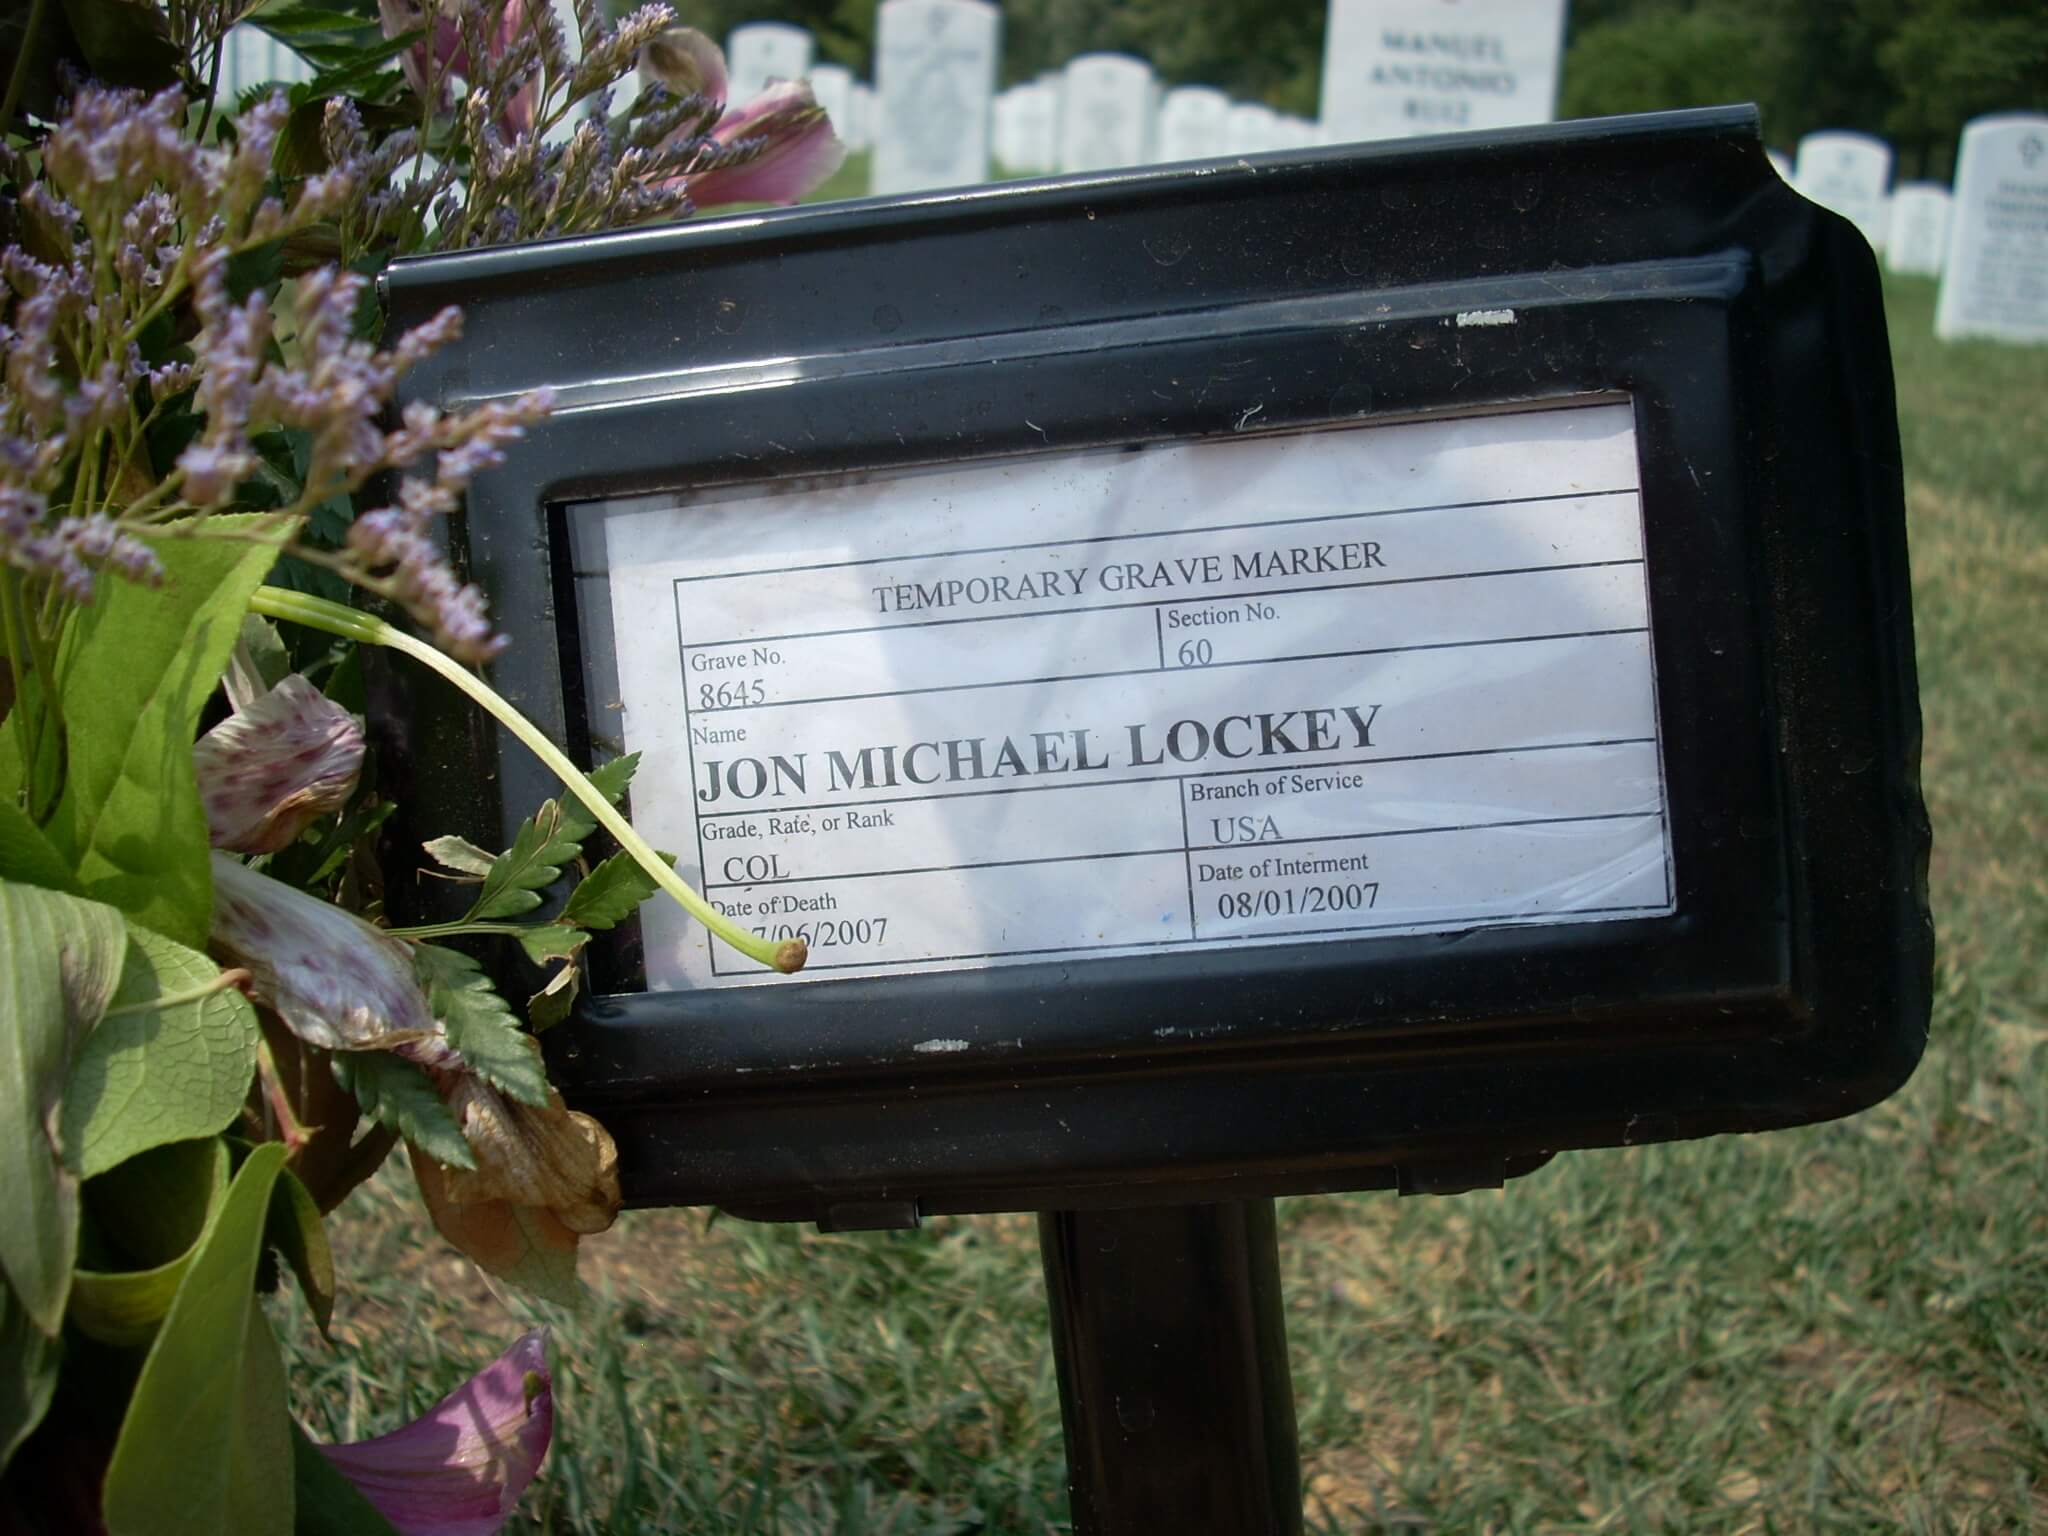 jmlockey-gravesite-photo-august-2007-001